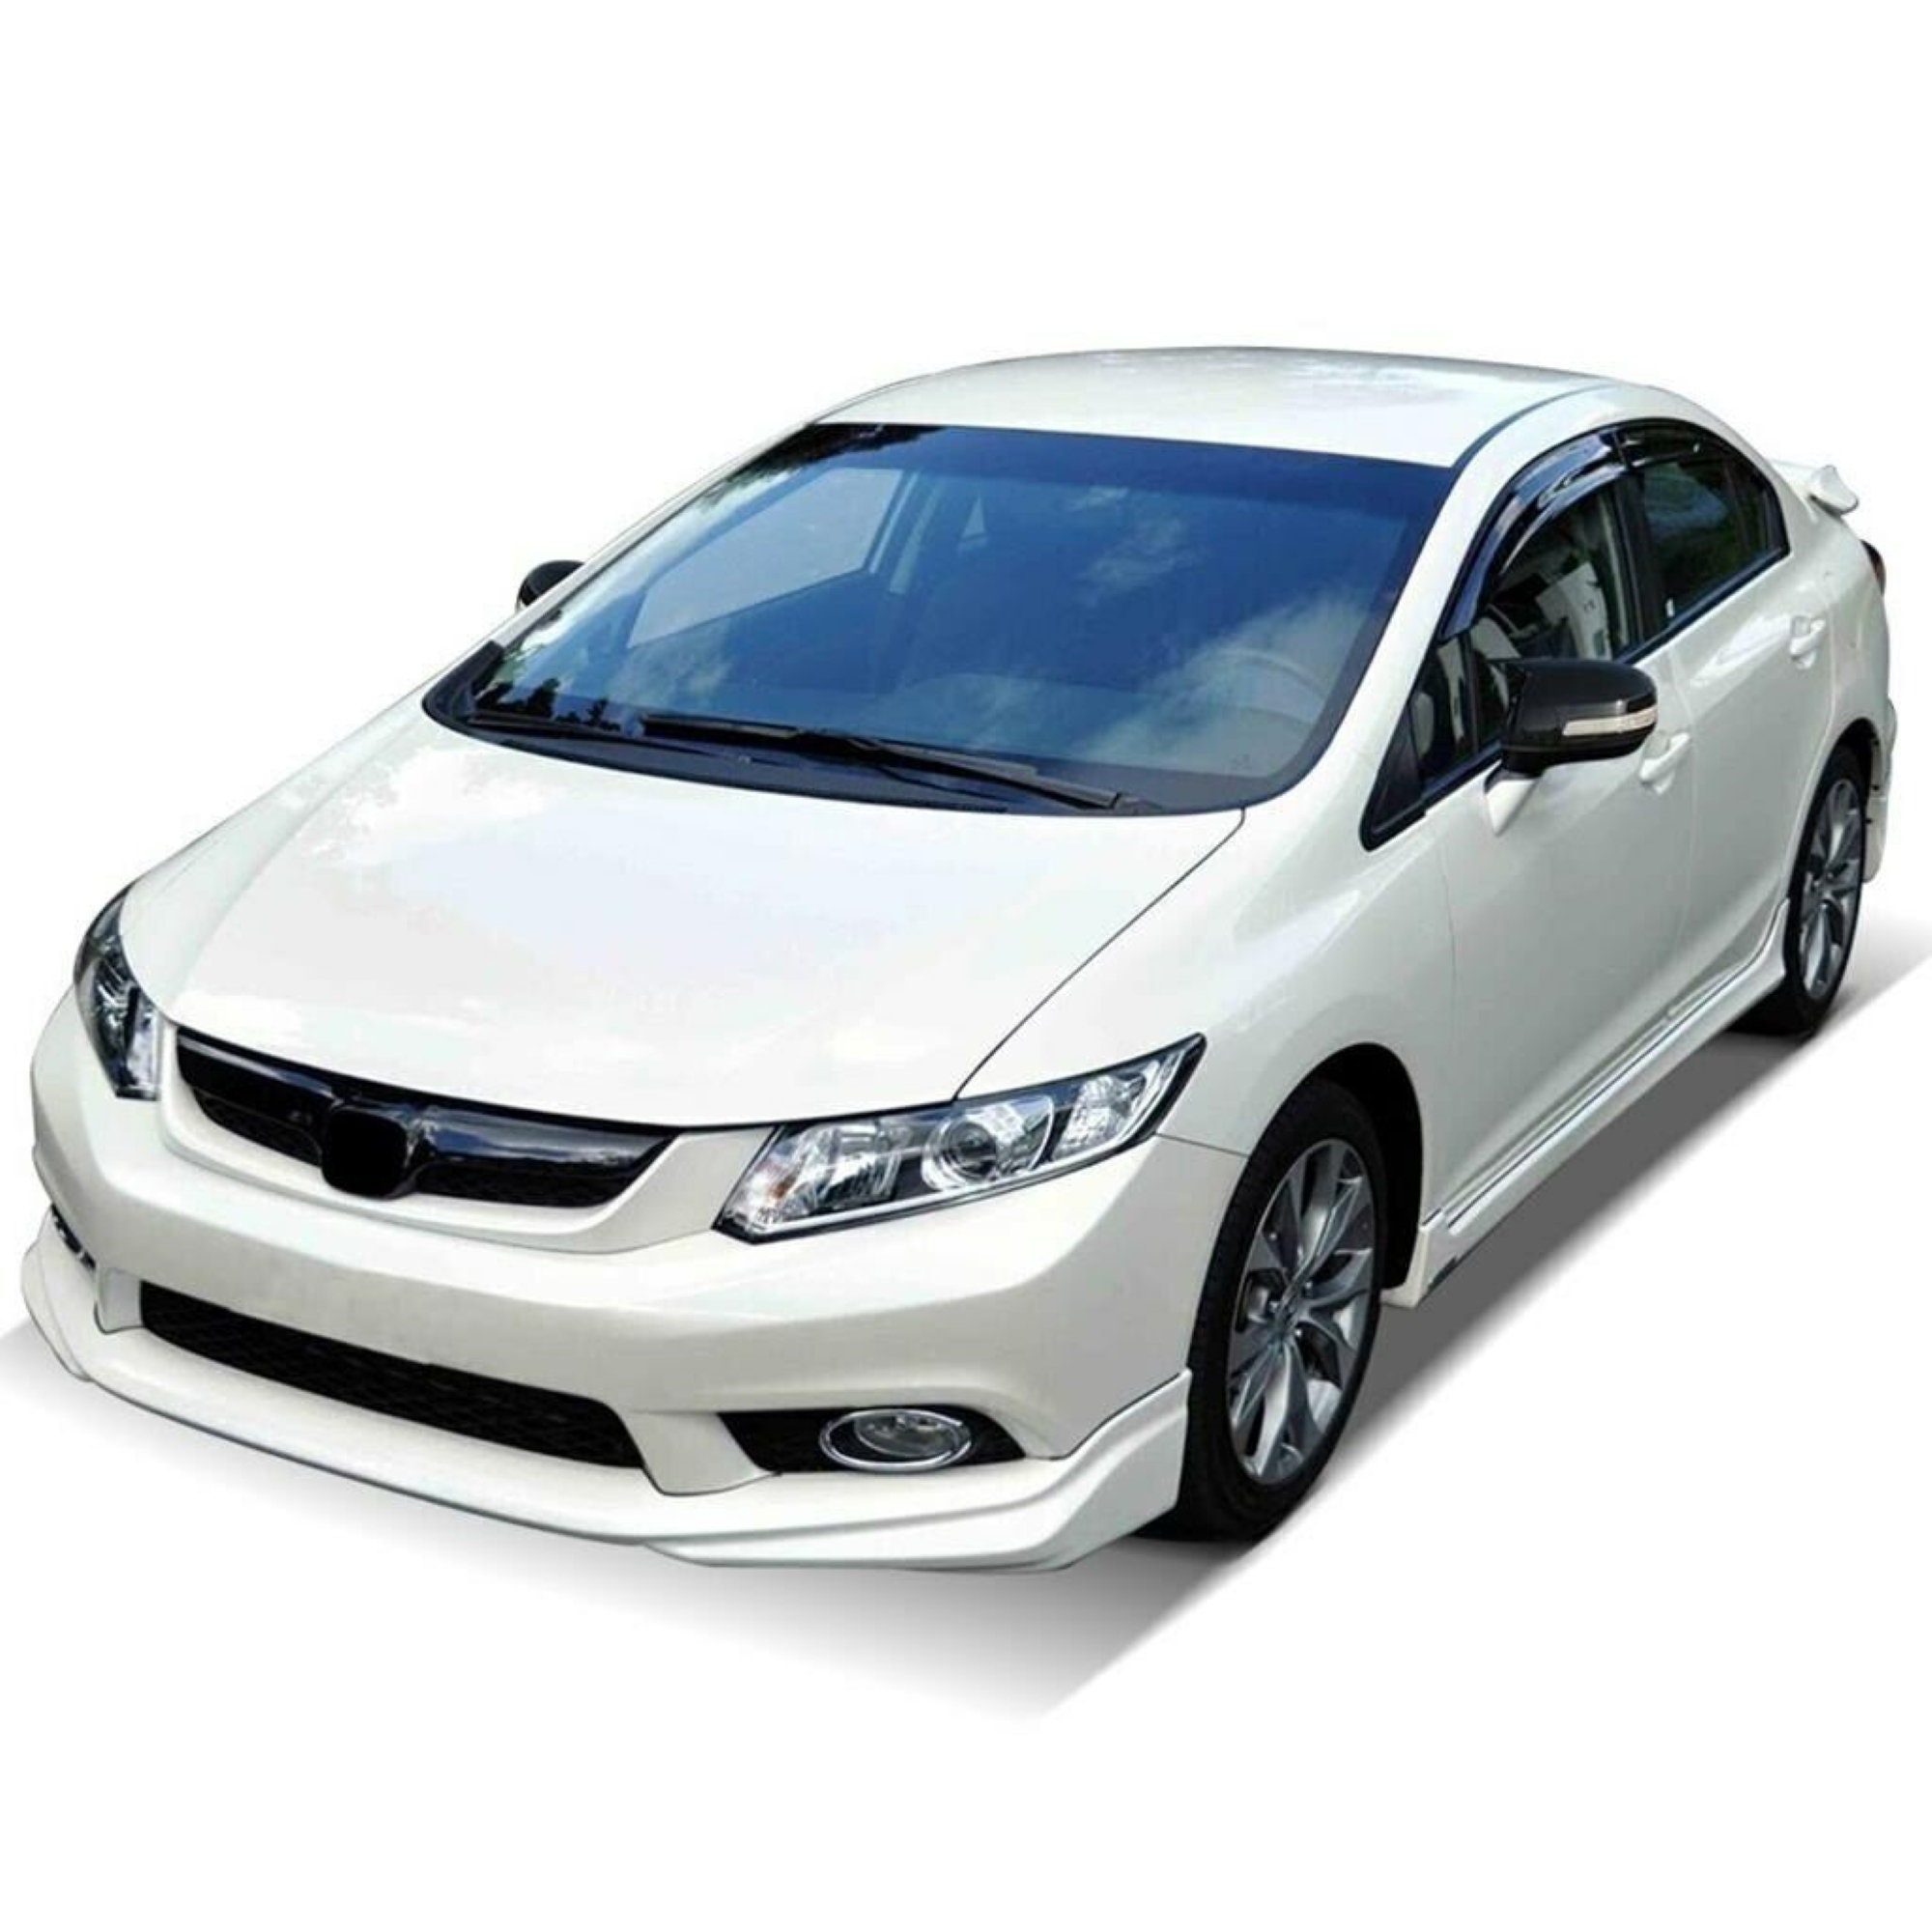  for 2006-2011 Honda Civic Sedan Models  Mugen RR Style ABS  Plastic Primer Black JDM Rear Trunk Lid Wing Spoiler : Automotive